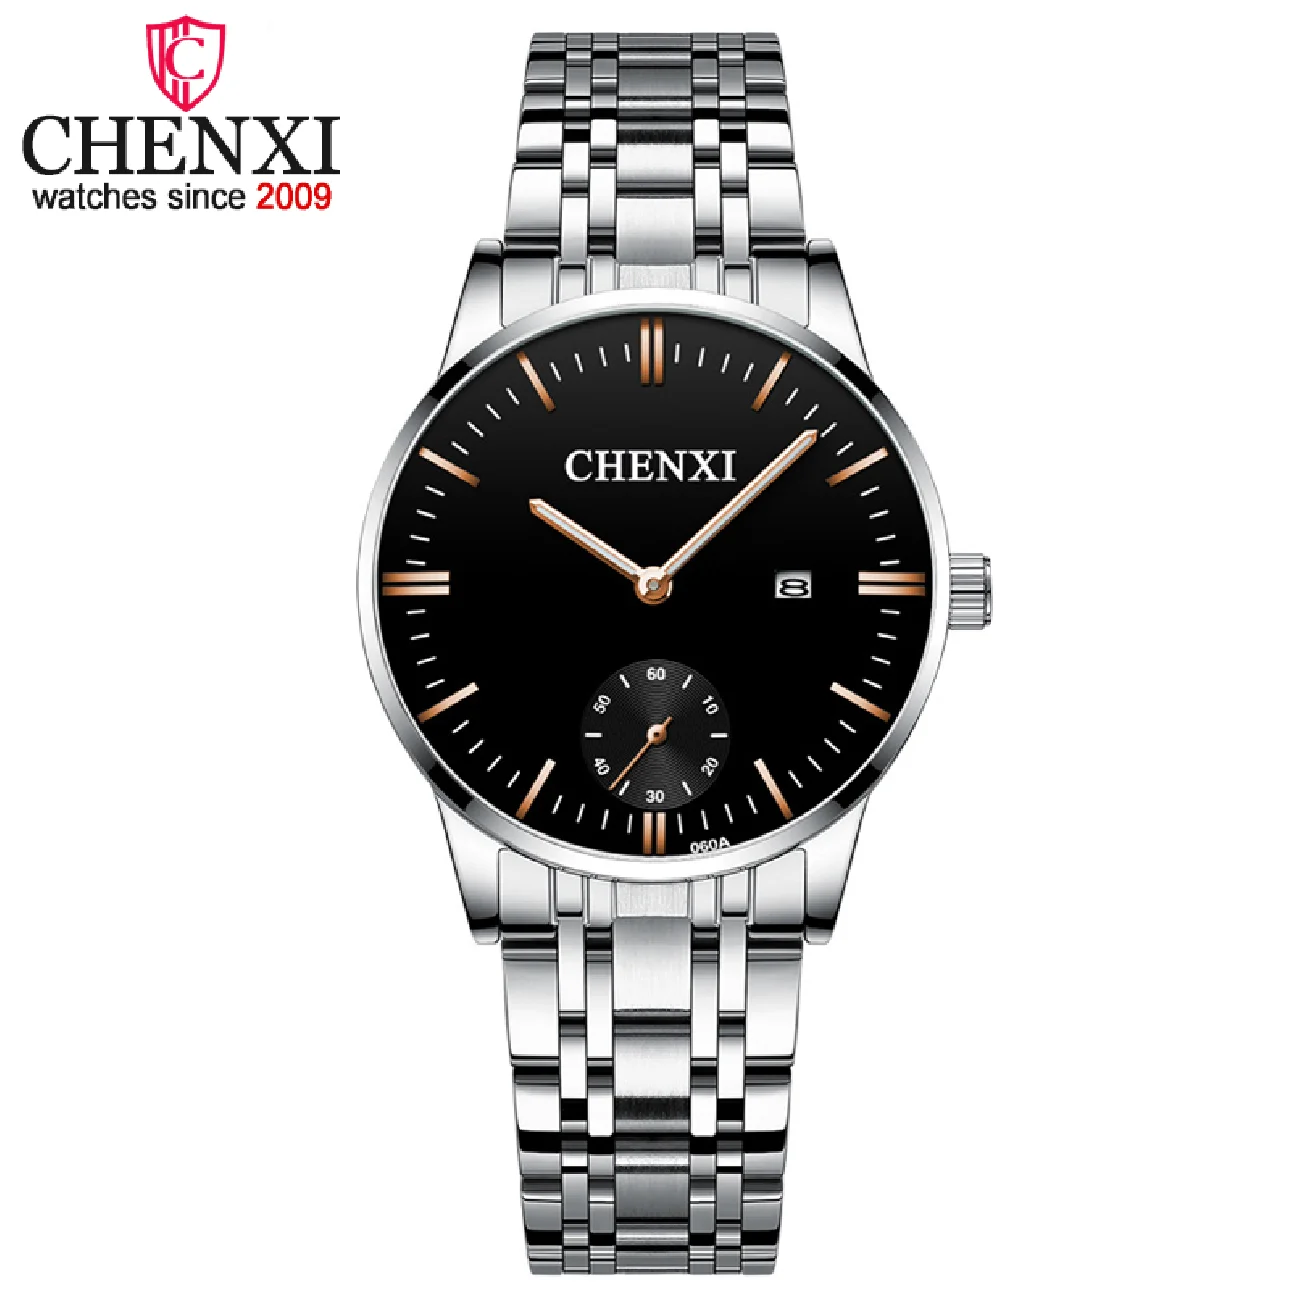 2022 Dress Business Women Watch CHENXI Top Brand Luxury Lady Fashion Casual Waterproof Watches Quartz Calendar Wristwatch enlarge